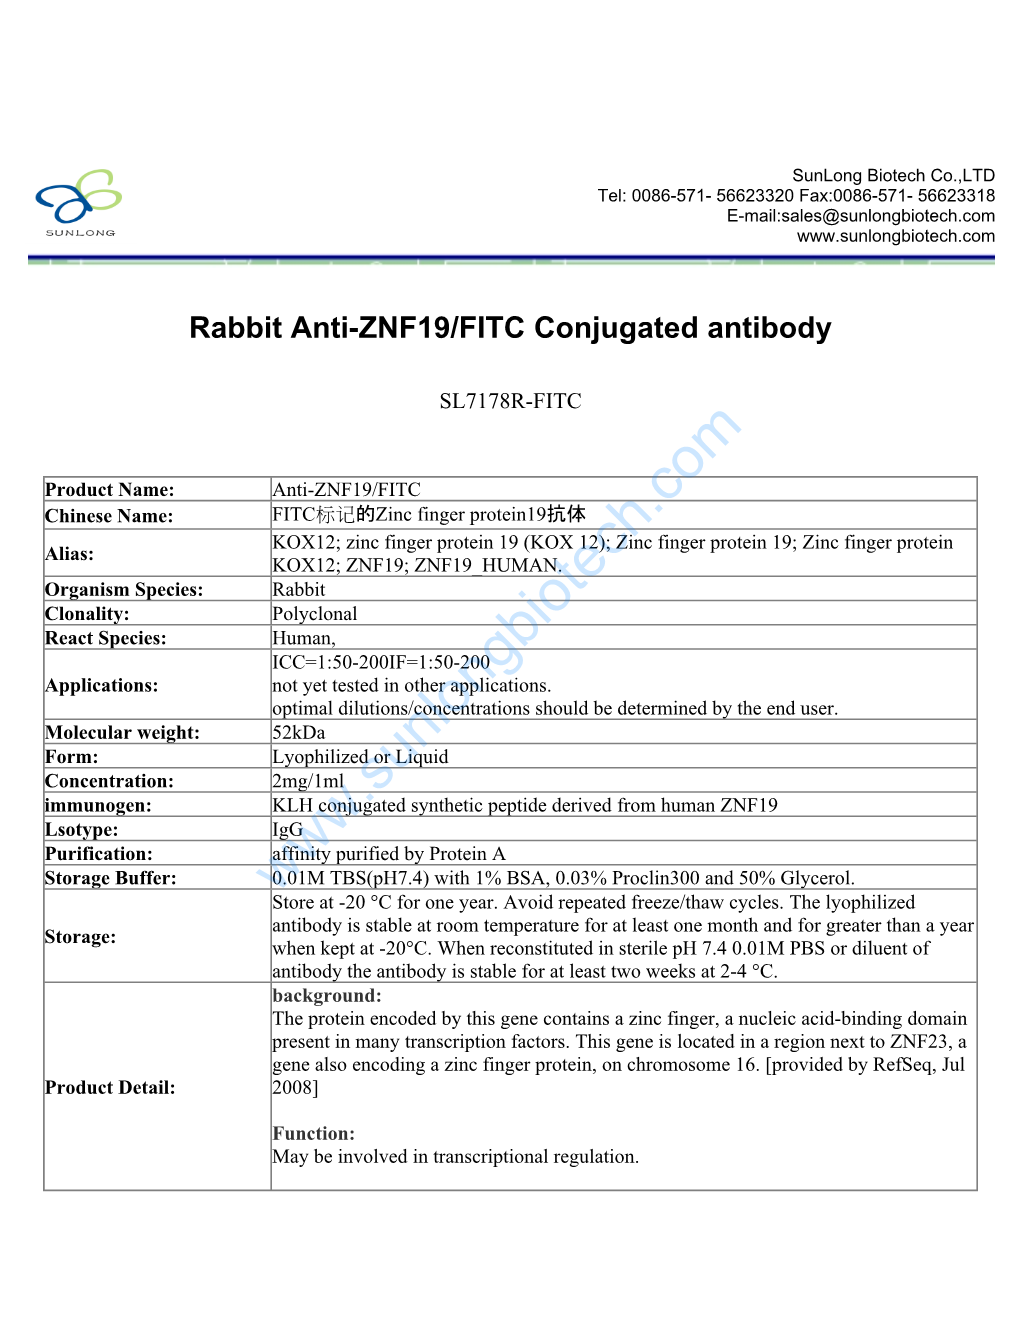 Rabbit Anti-ZNF19/FITC Conjugated Antibody